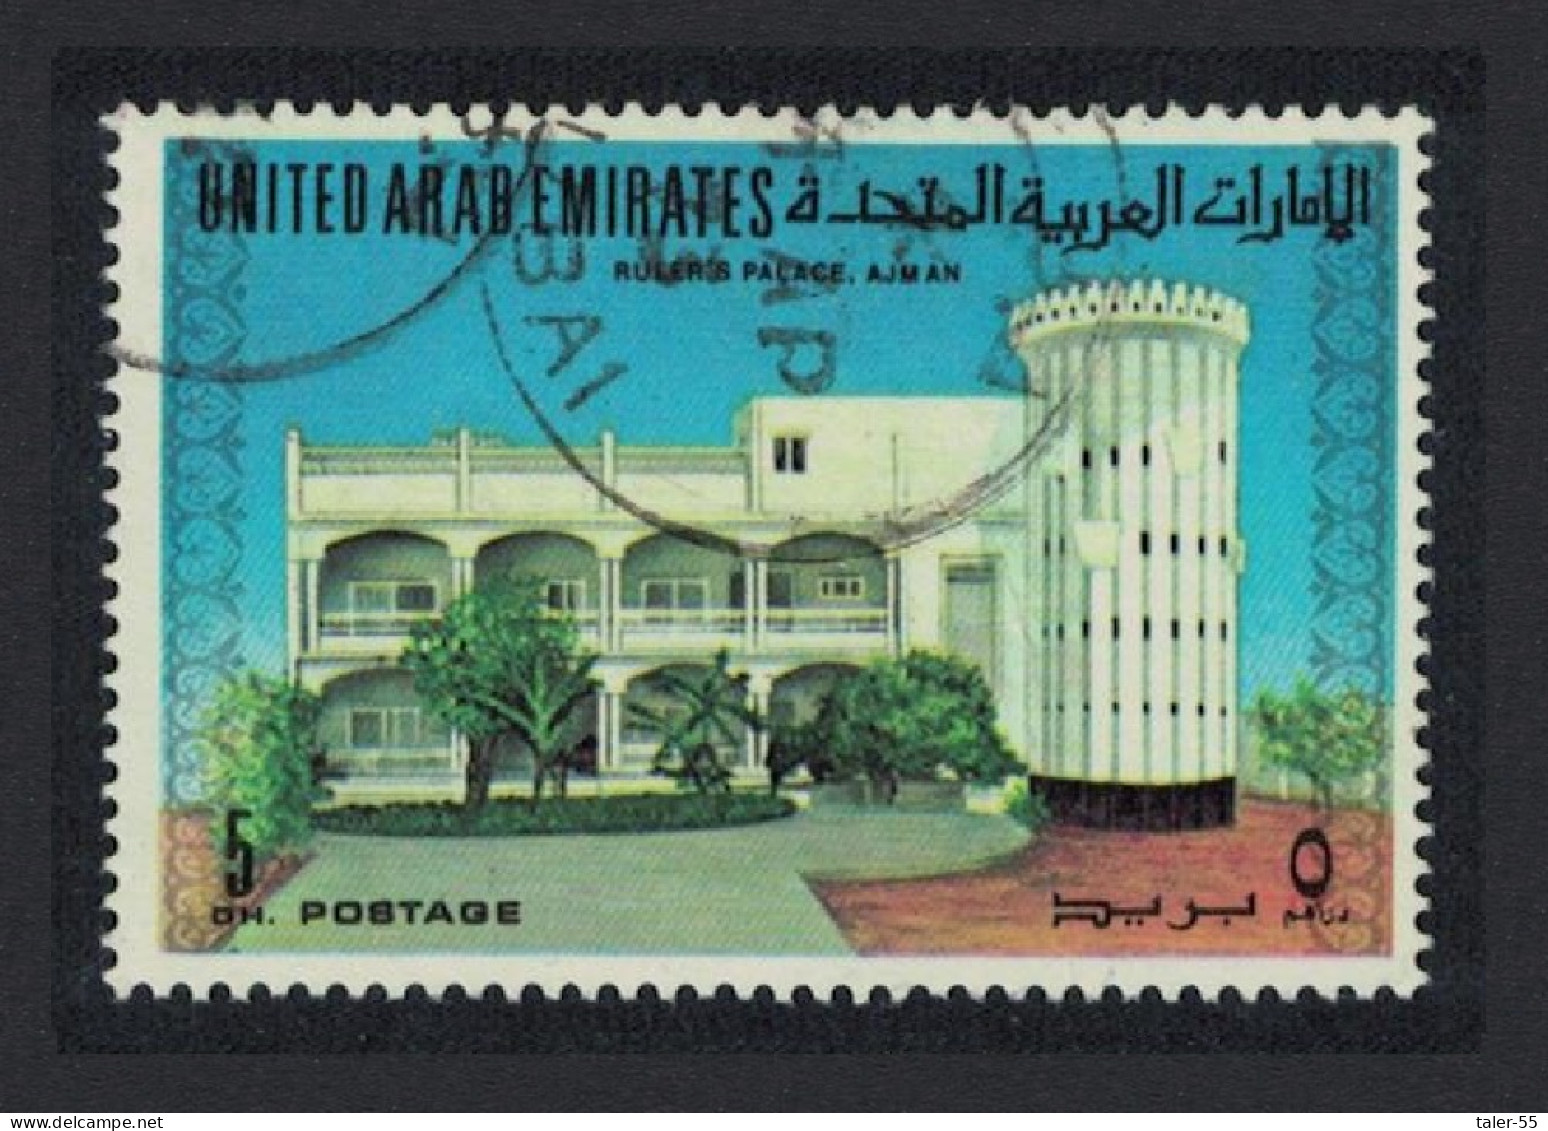 United Arab Emirates Ruler's Palace Ajman 5 Dh 1973 MNH SG#11 MI#11 - Emiratos Árabes Unidos